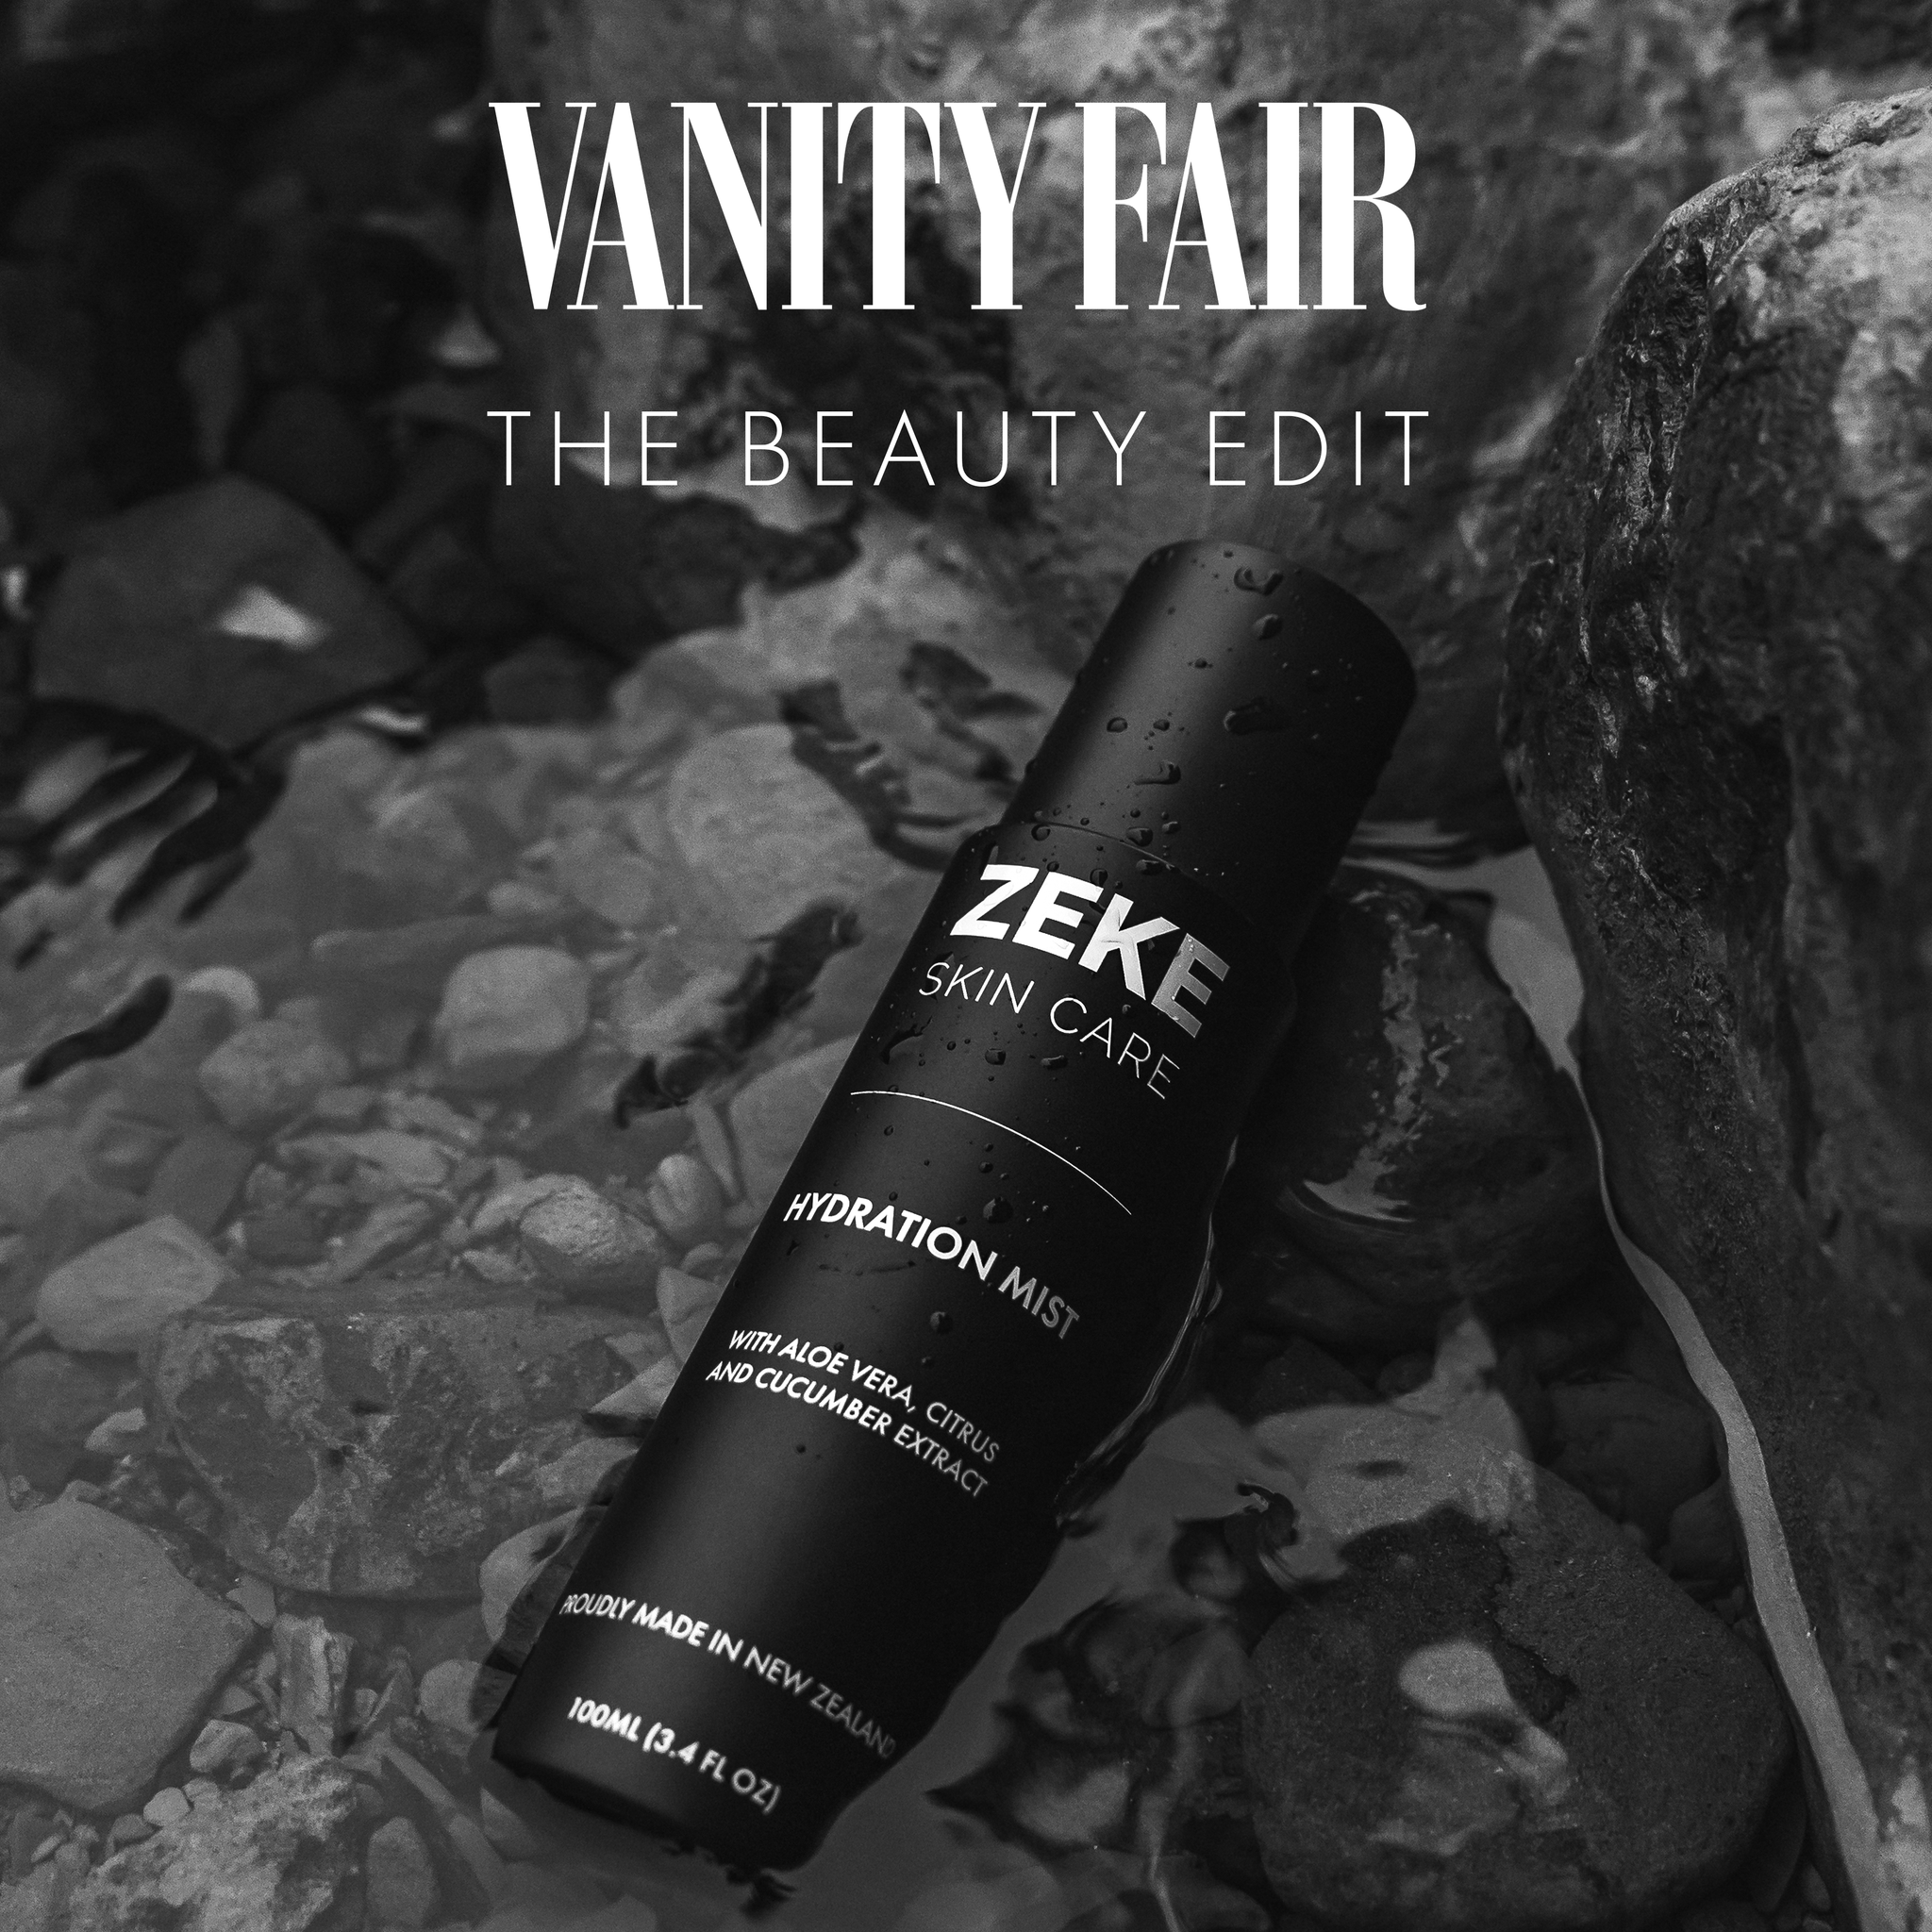 Zeke Skincare last feature in Vanity Fair!